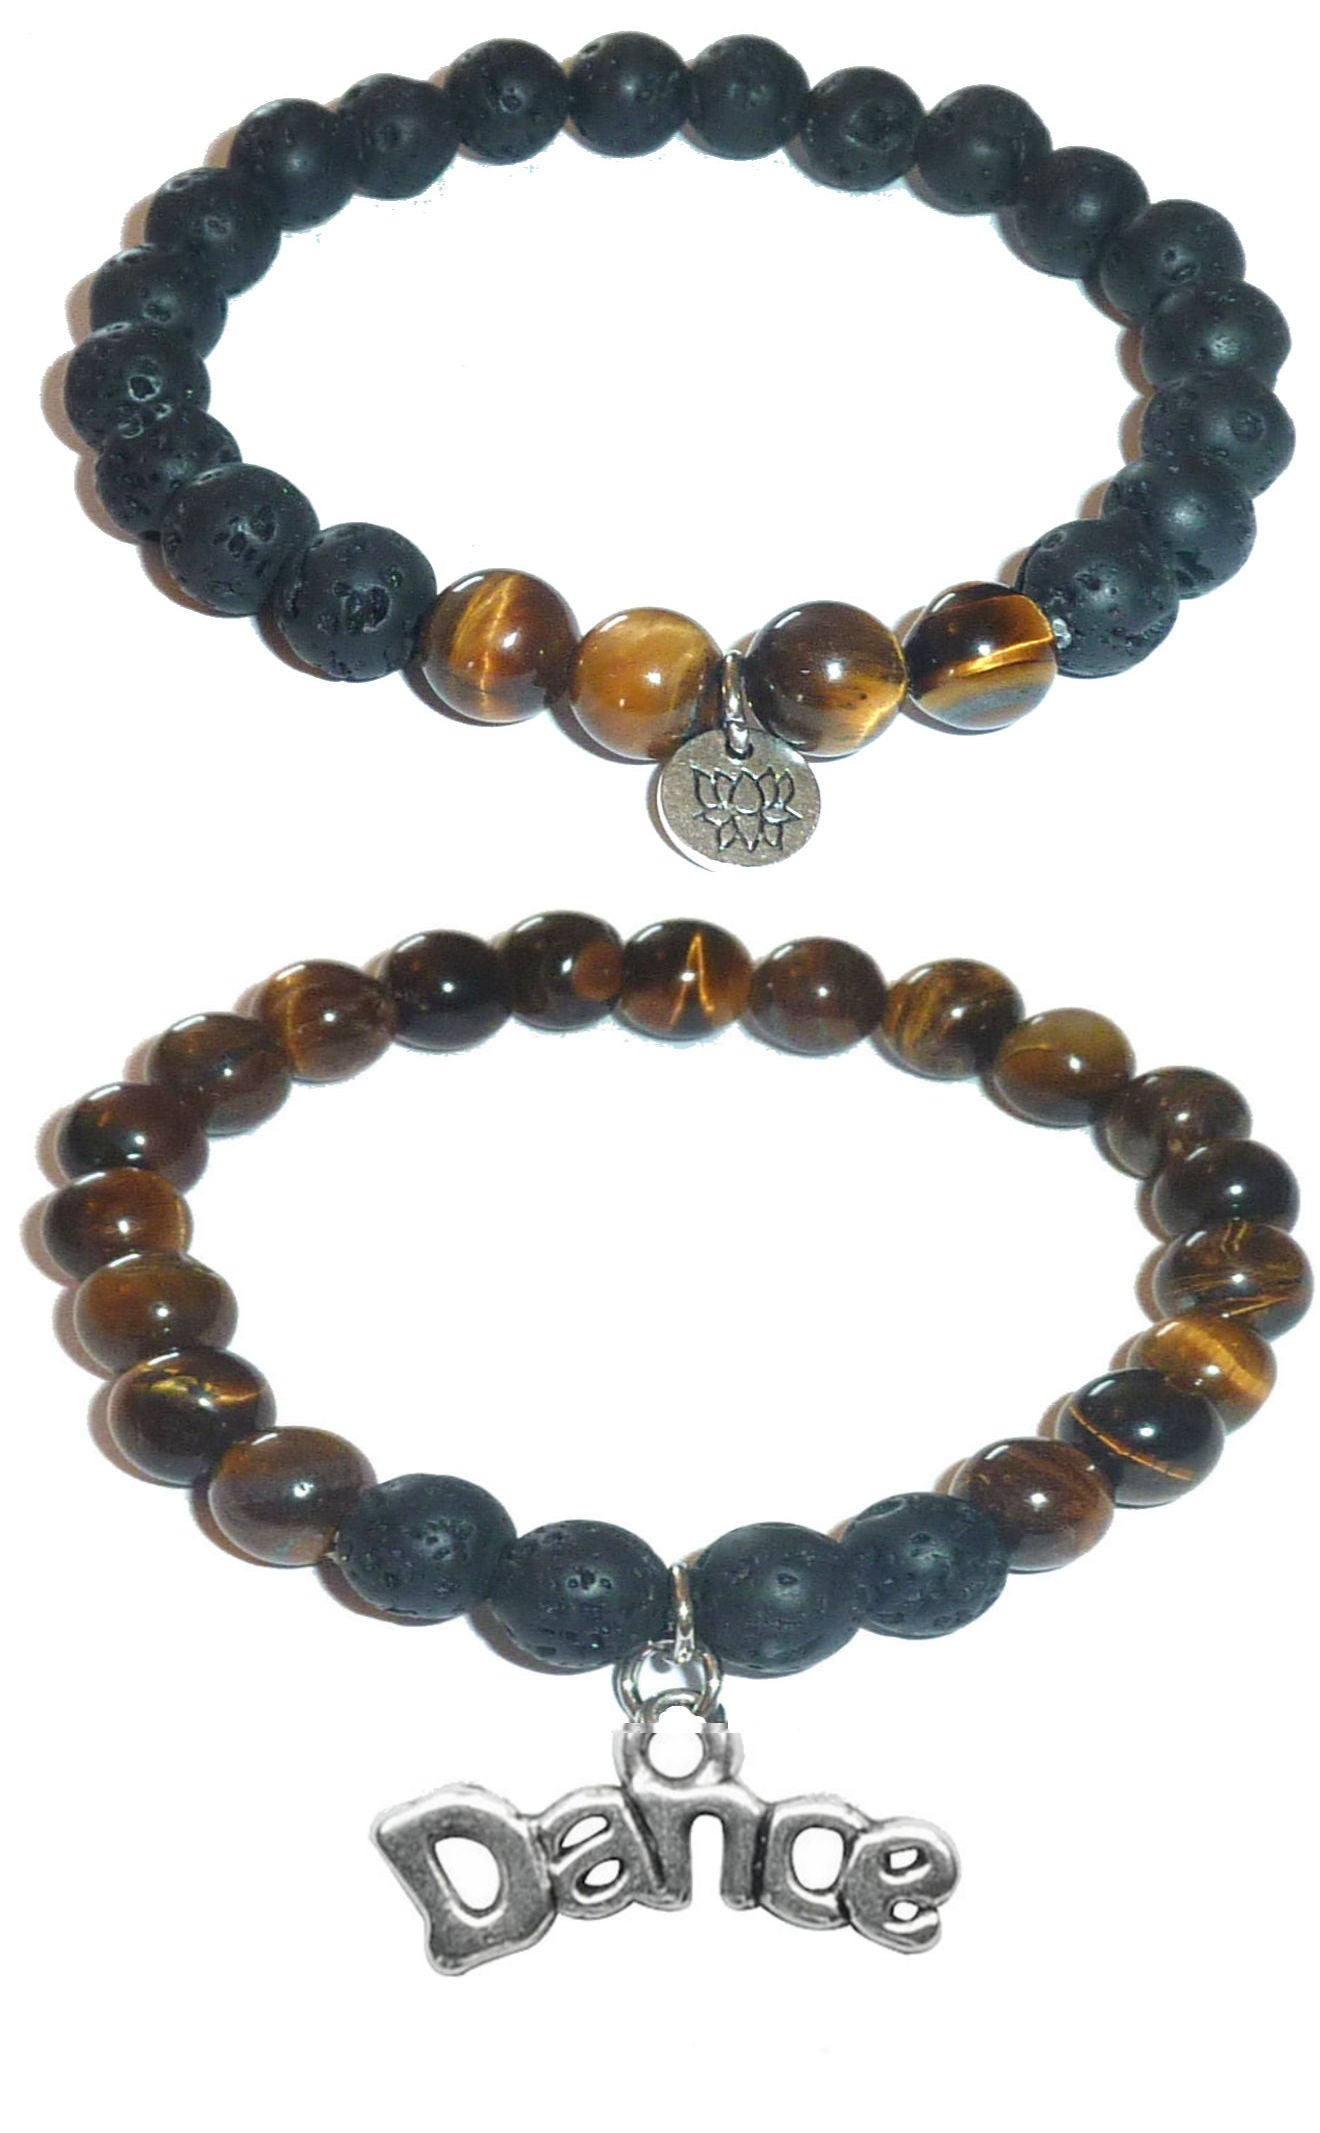 Dance - Women's Tiger Eye & Black Lava Diffuser Yoga Beads Charm Stretch Bracelet Gift Set